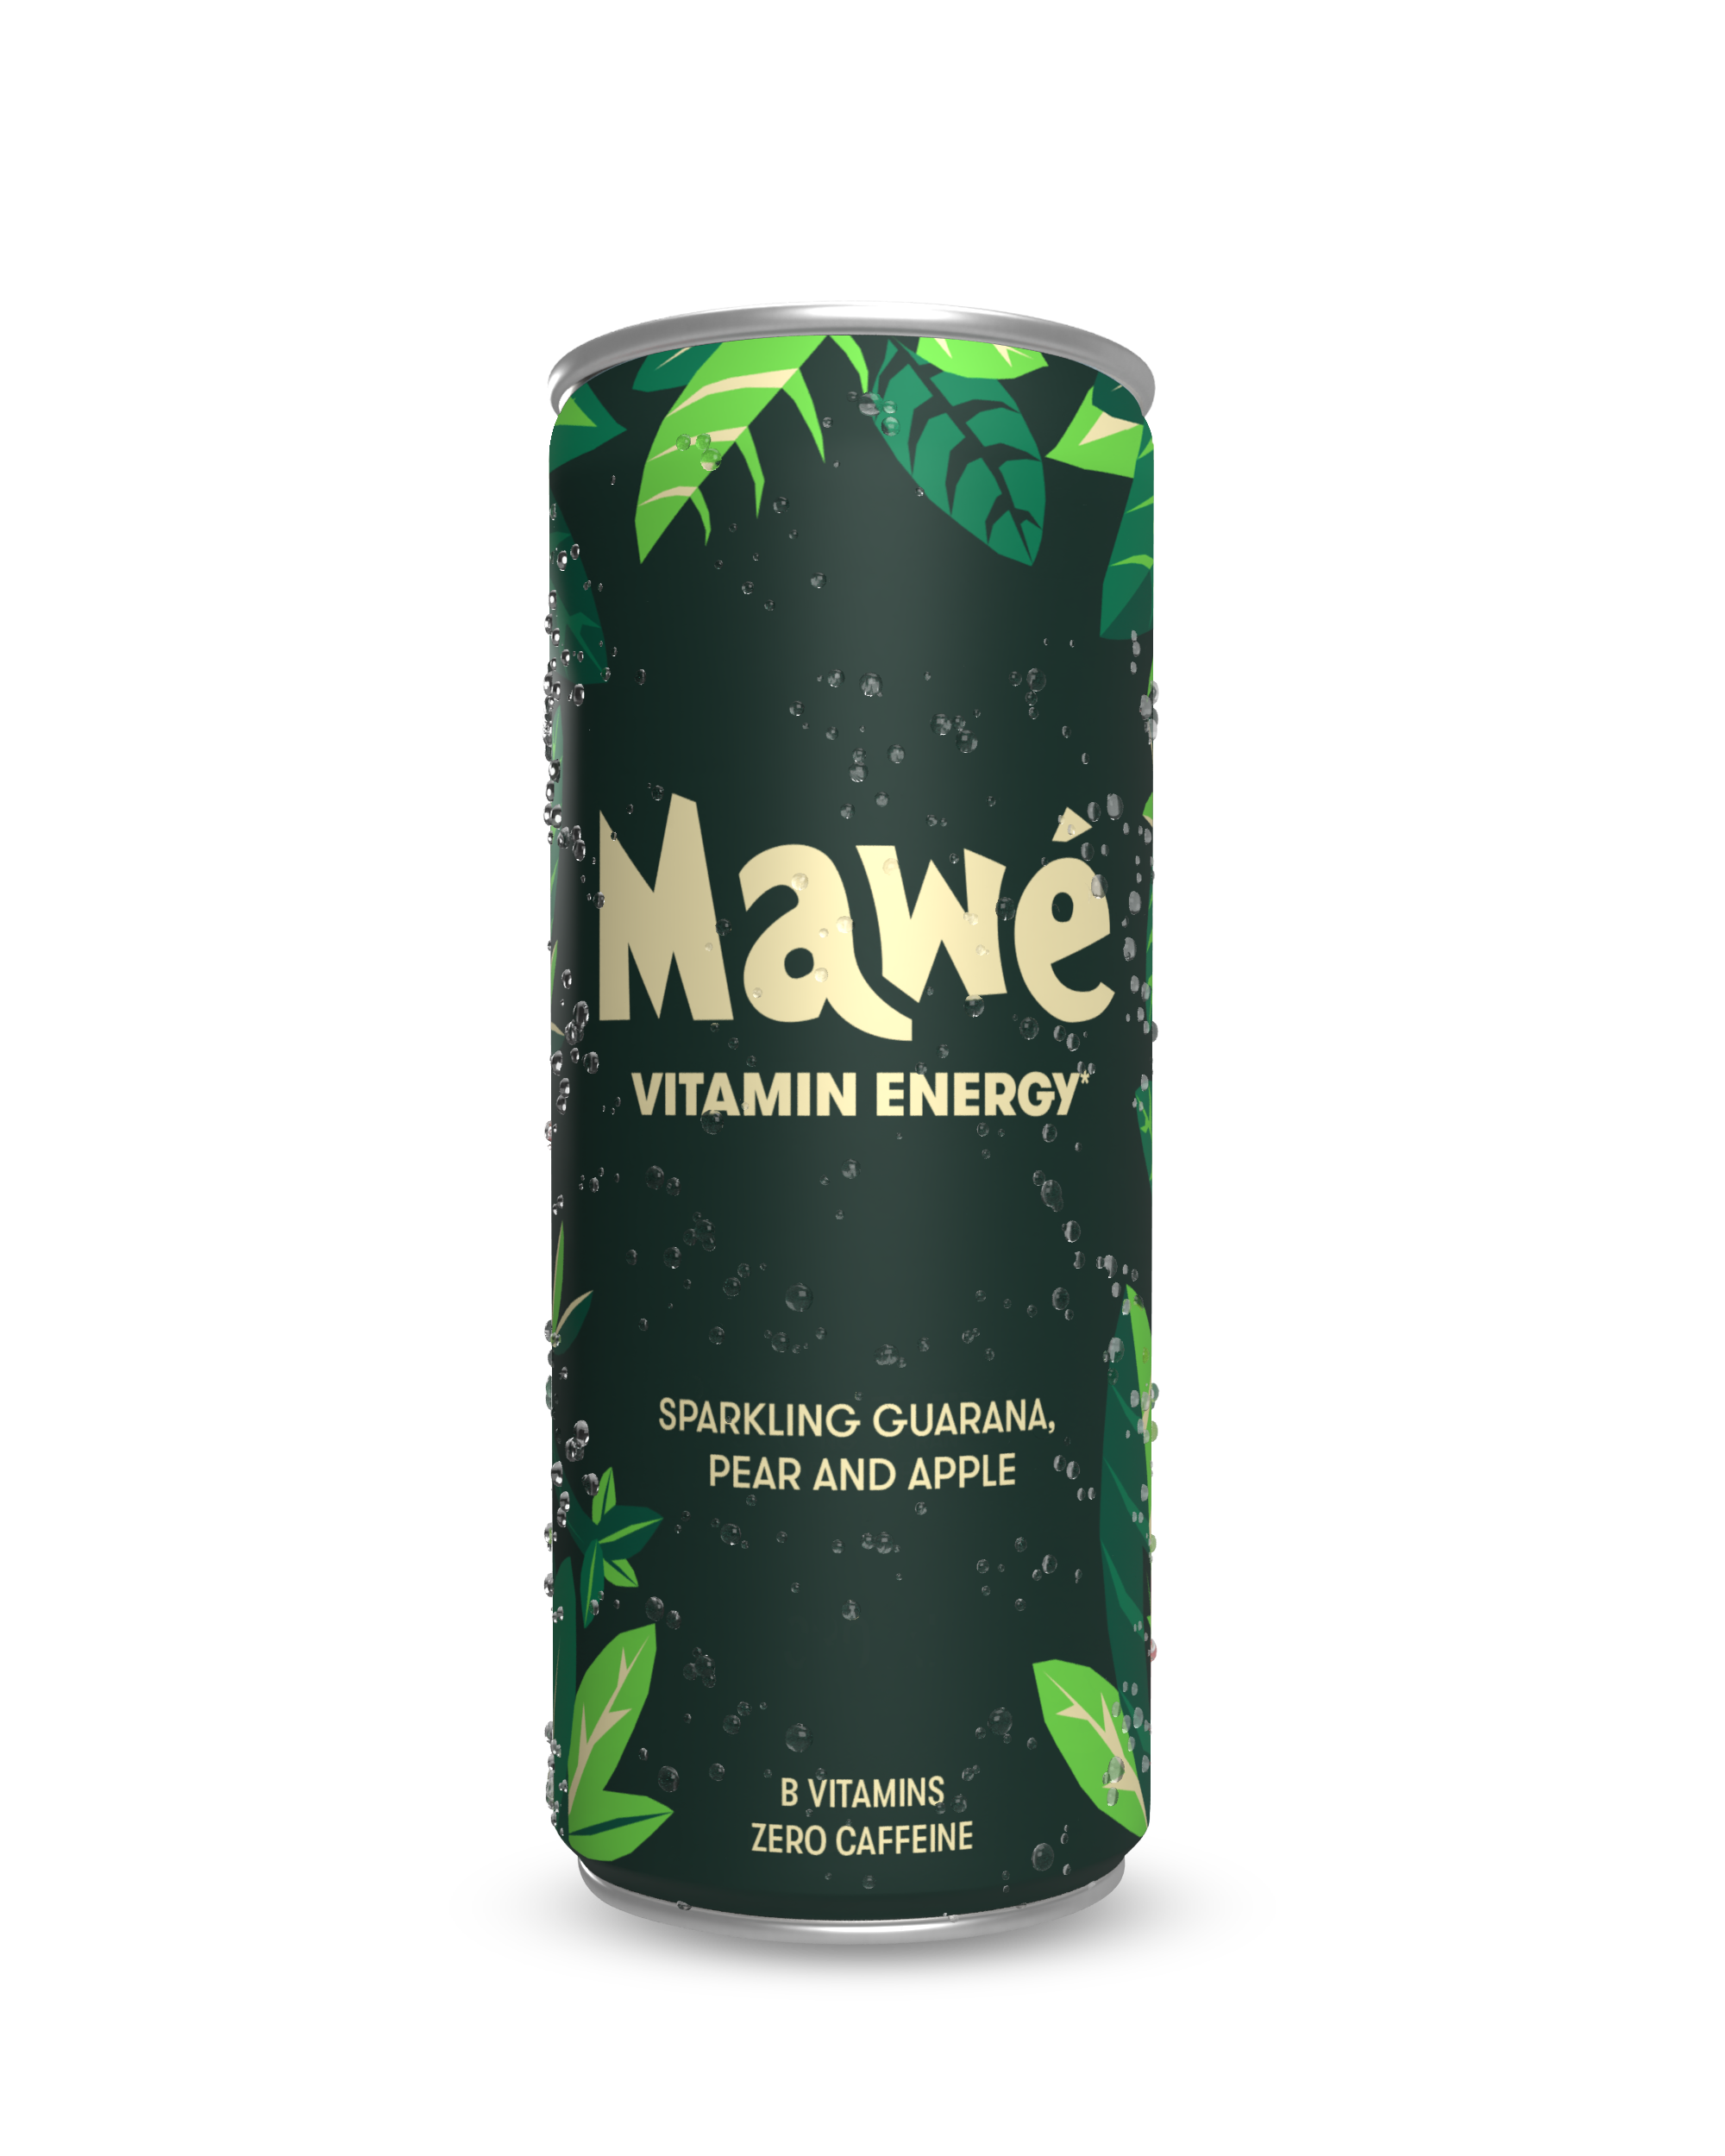 Caffeine-free vitamin energy drink Mawé hits shelves